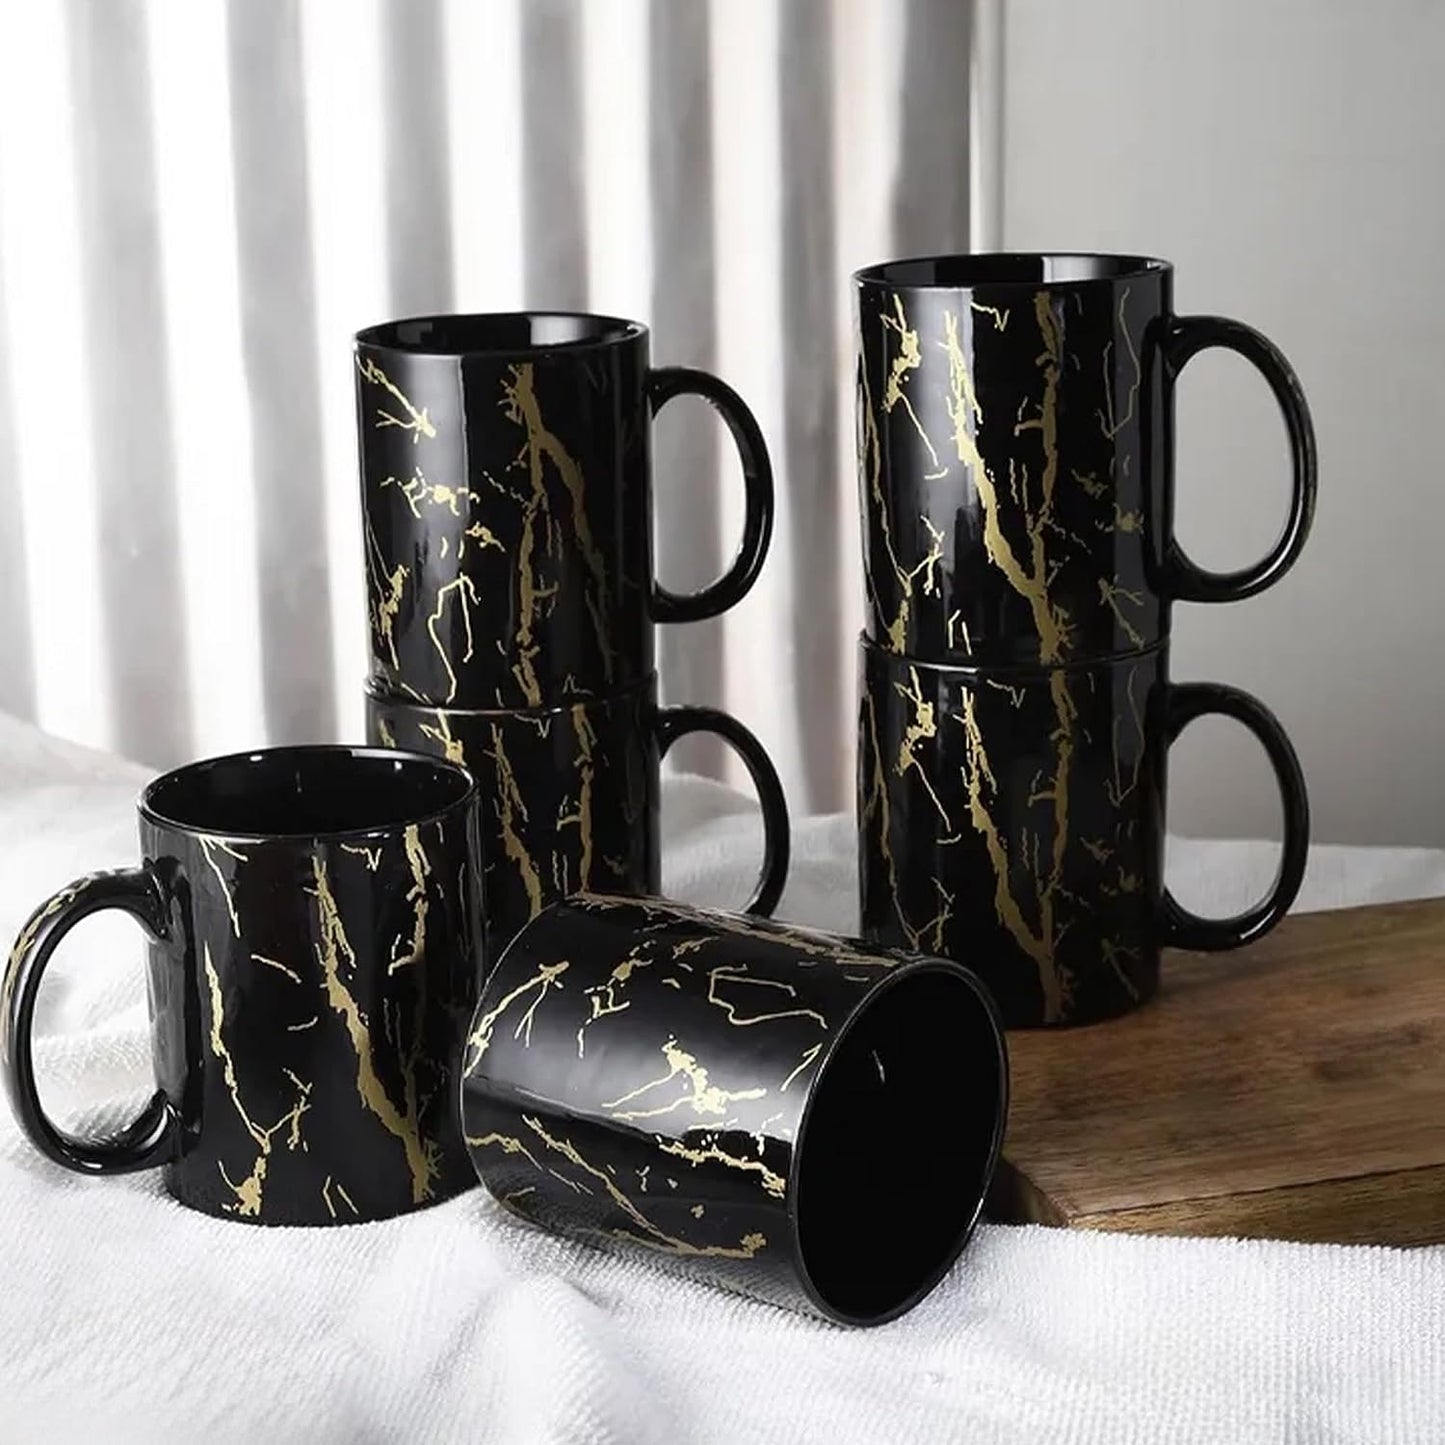 Merakrt Black Copper Pipe Coffee Mug Set- Handmade Ceramic Mugs for Tea and Coffee, Microwave Safe, Elegant Black Color Mugs, Perfect for Tea Coffee Lovers